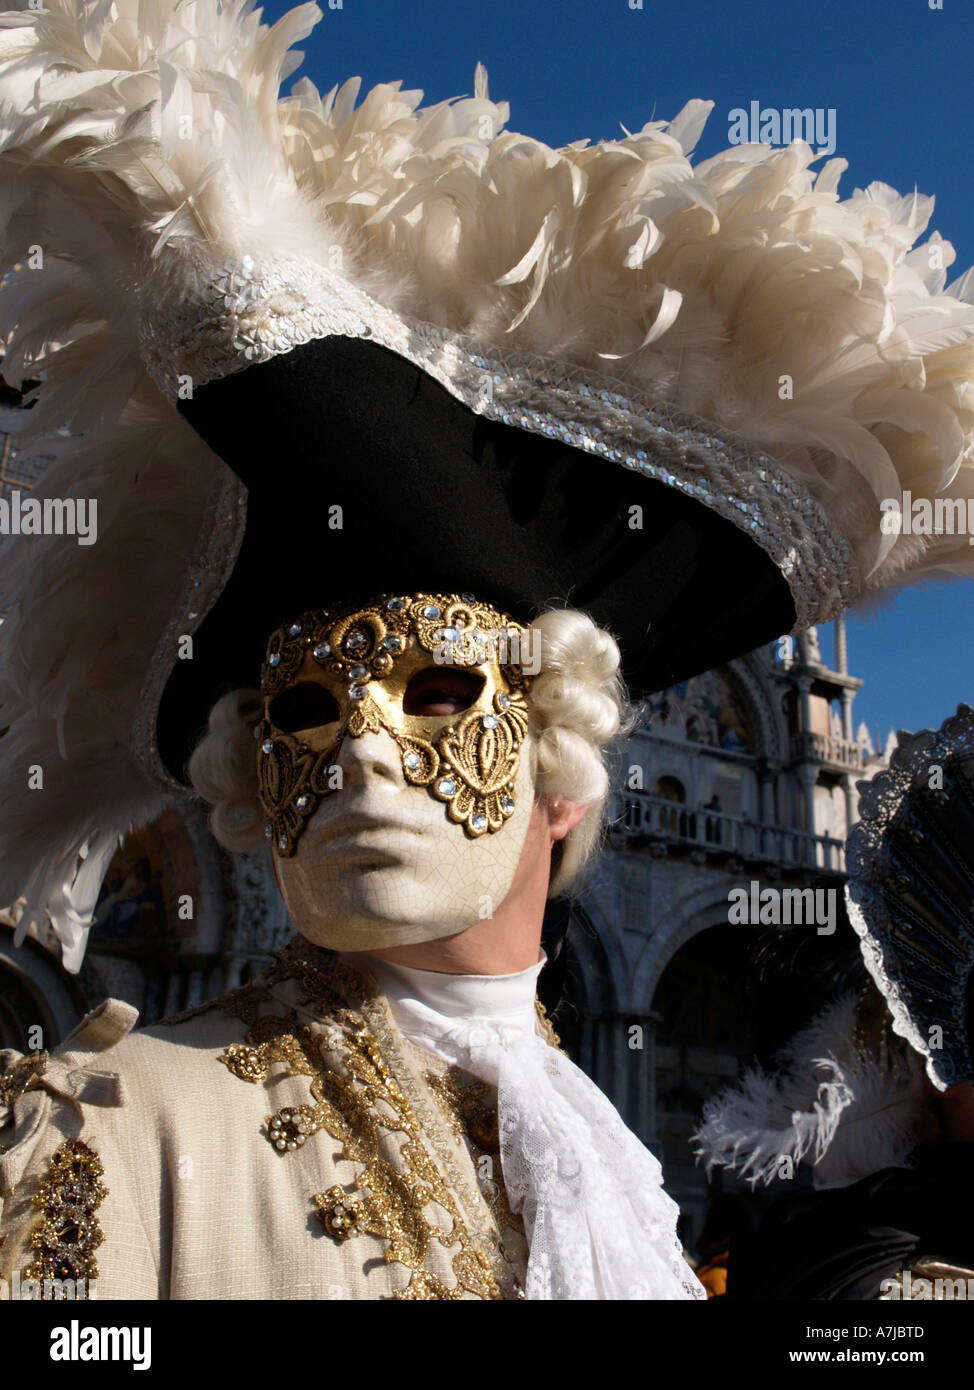 Mann im 18. Jahrhundert Kostüm mit Dreispitz Federhut Karneval in Venedig  Stockfotografie - Alamy